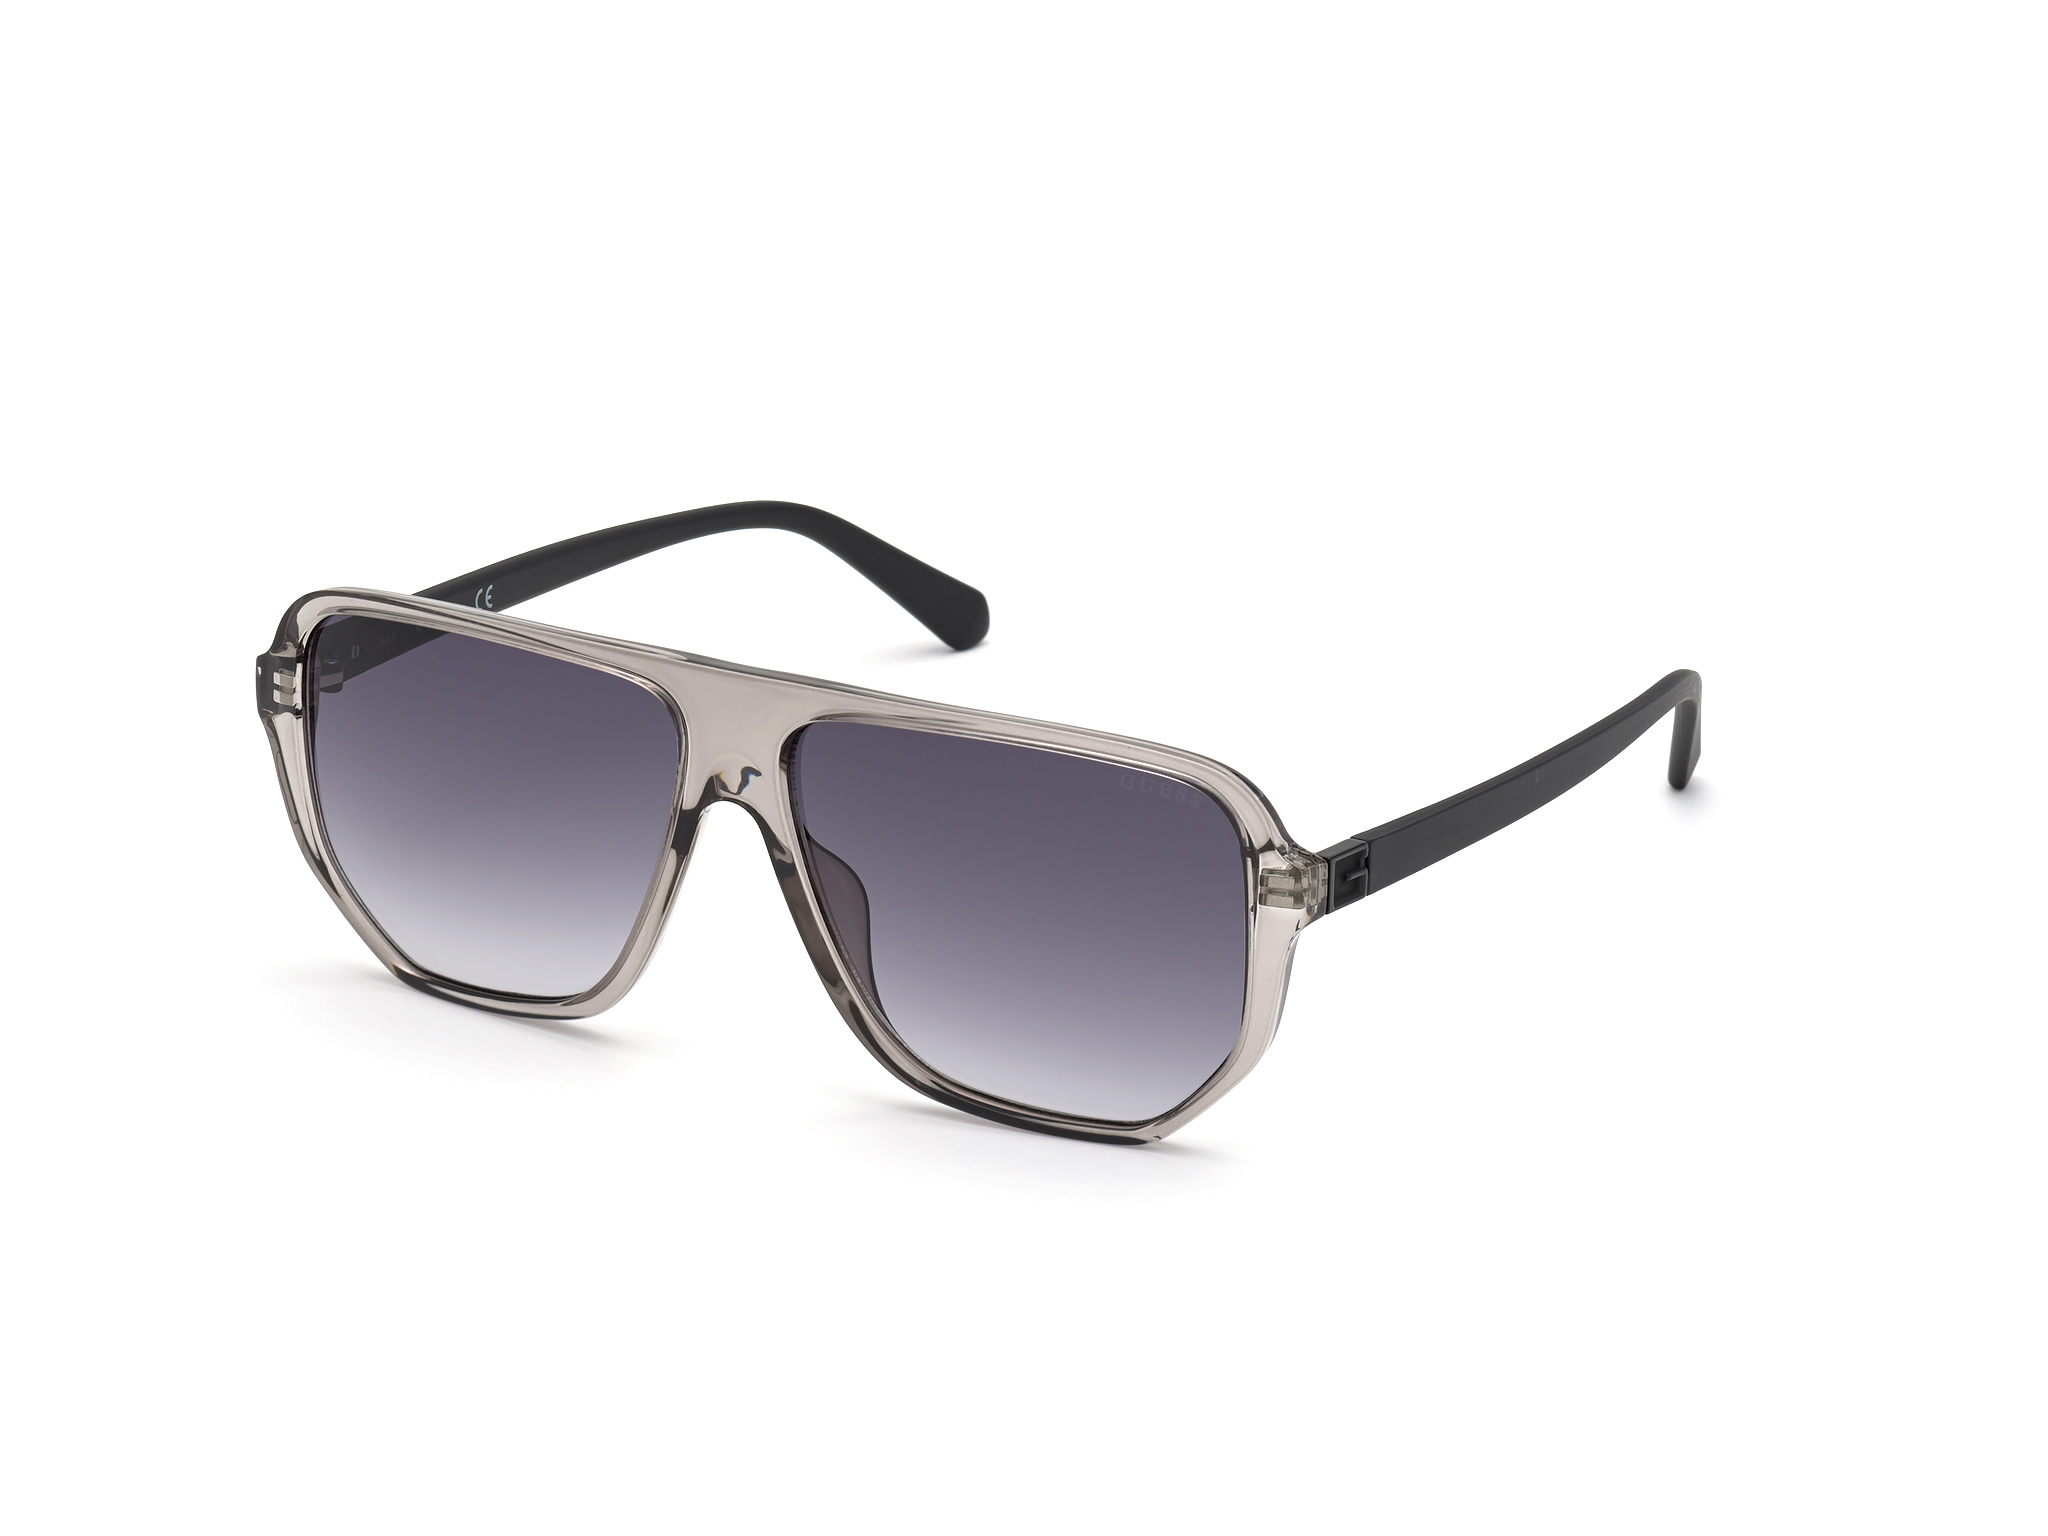 Guess GU 00003 Sunglasses from $115.70 | Guess Sunglasses | Designer ...